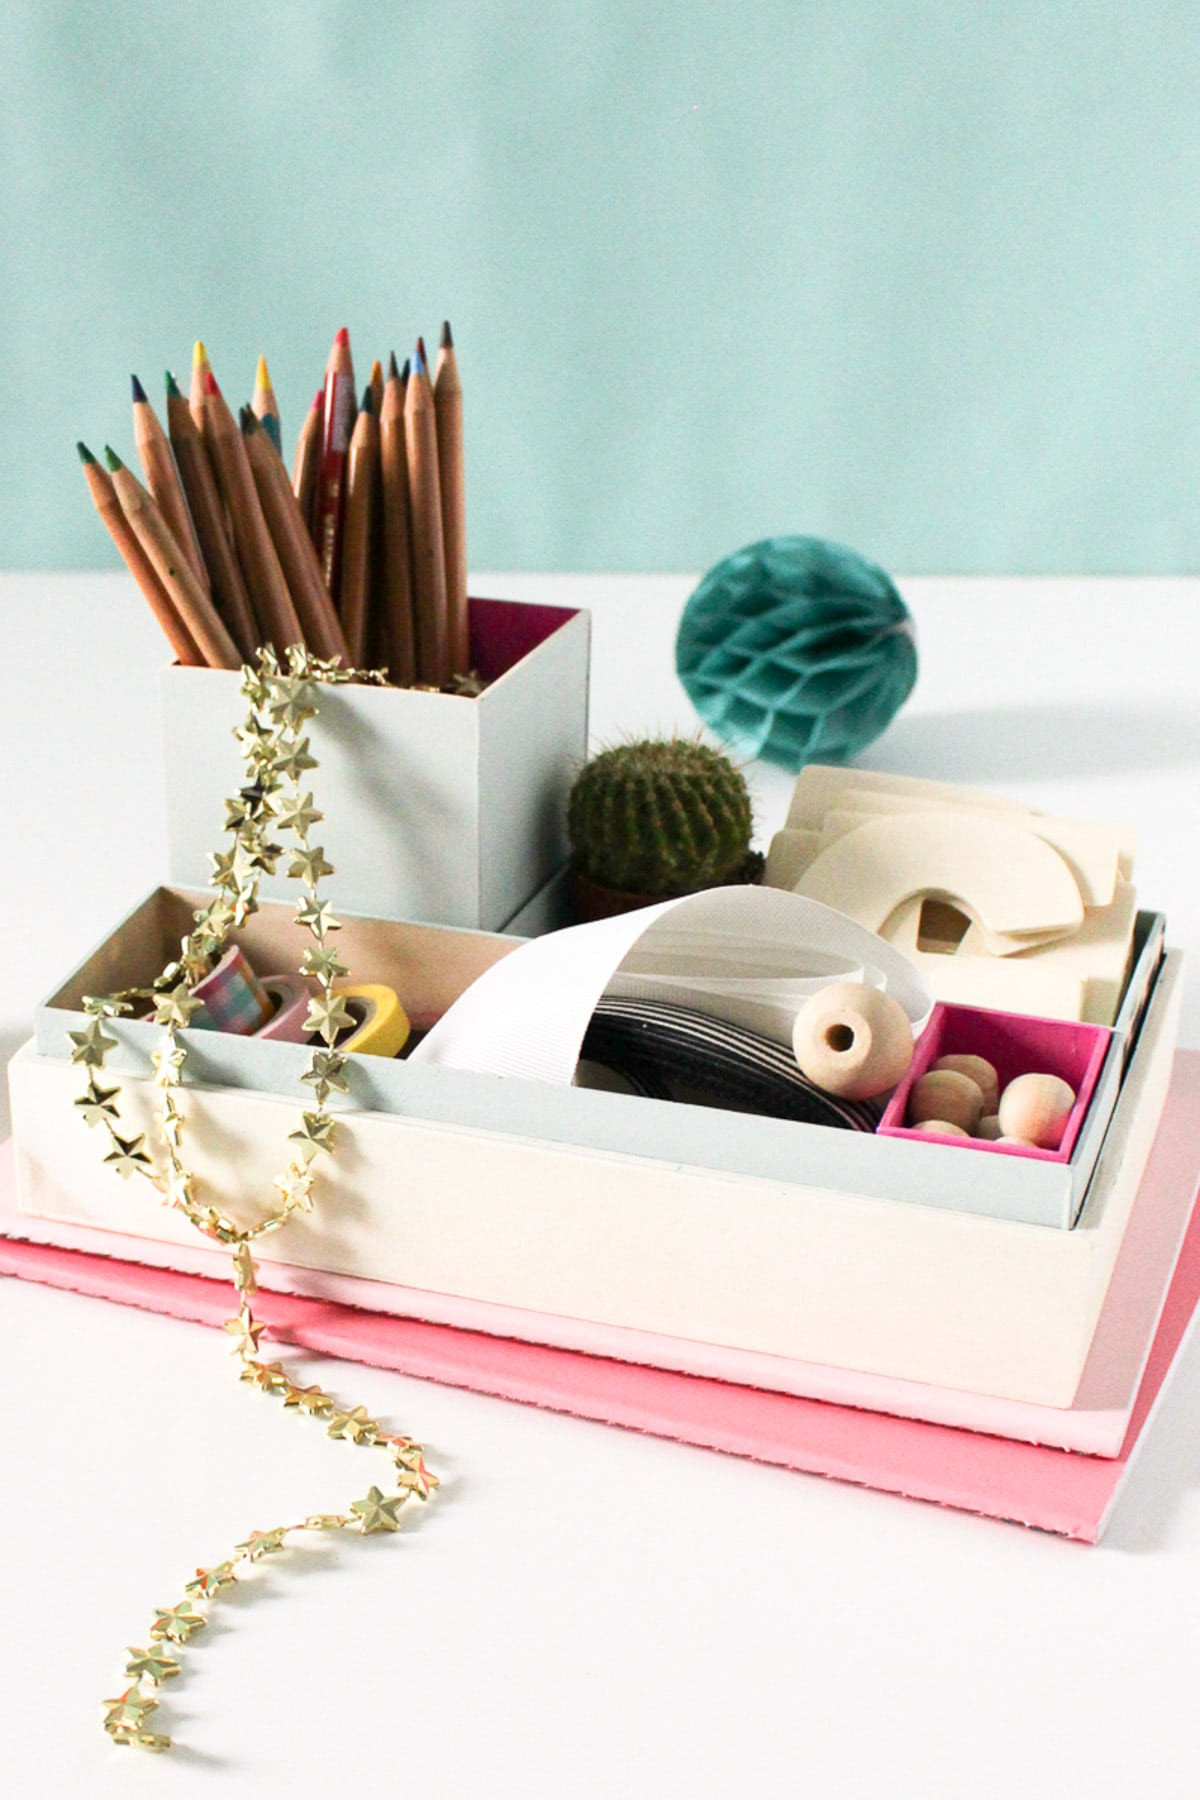 Best ideas about DIY Desk Organizers
. Save or Pin DIY Nesting Desk Organizer Now.